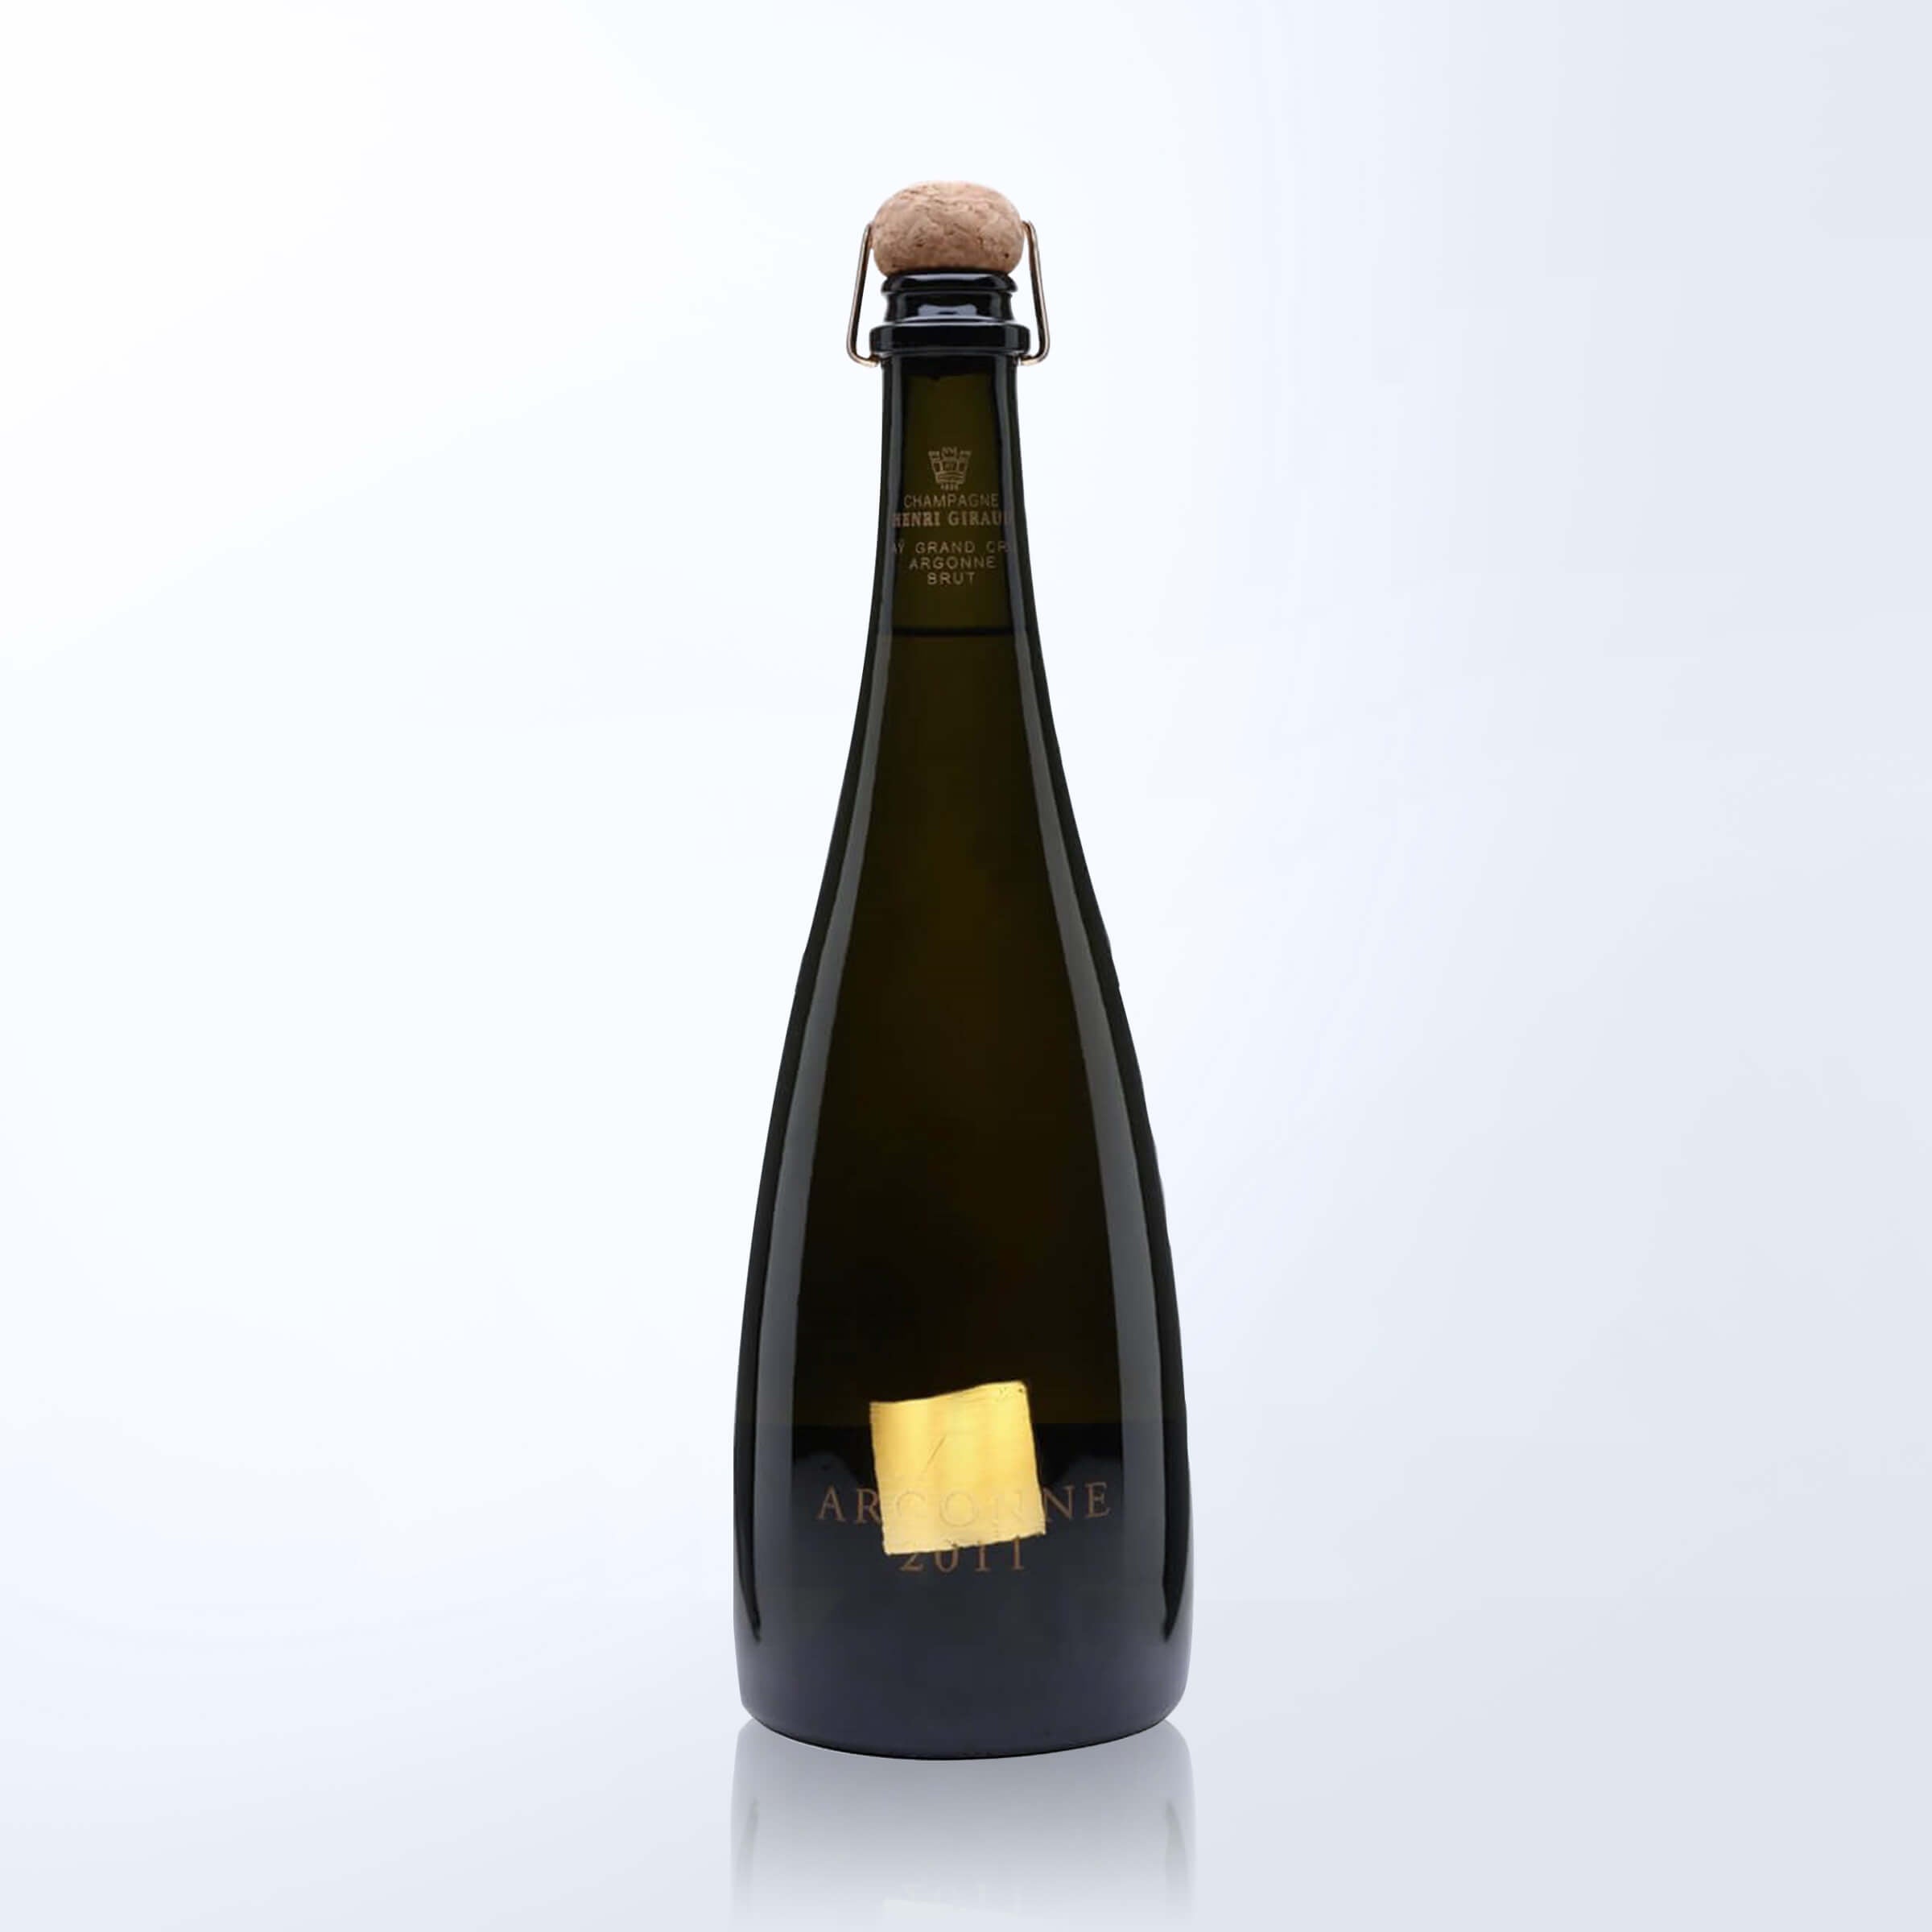 Henri Giraud Argonne rose 2011 with Engraving |亨利吉羅2011年份橡木桶陳釀桃紅香檳(含文字雕刻） - Design Your Own Wine